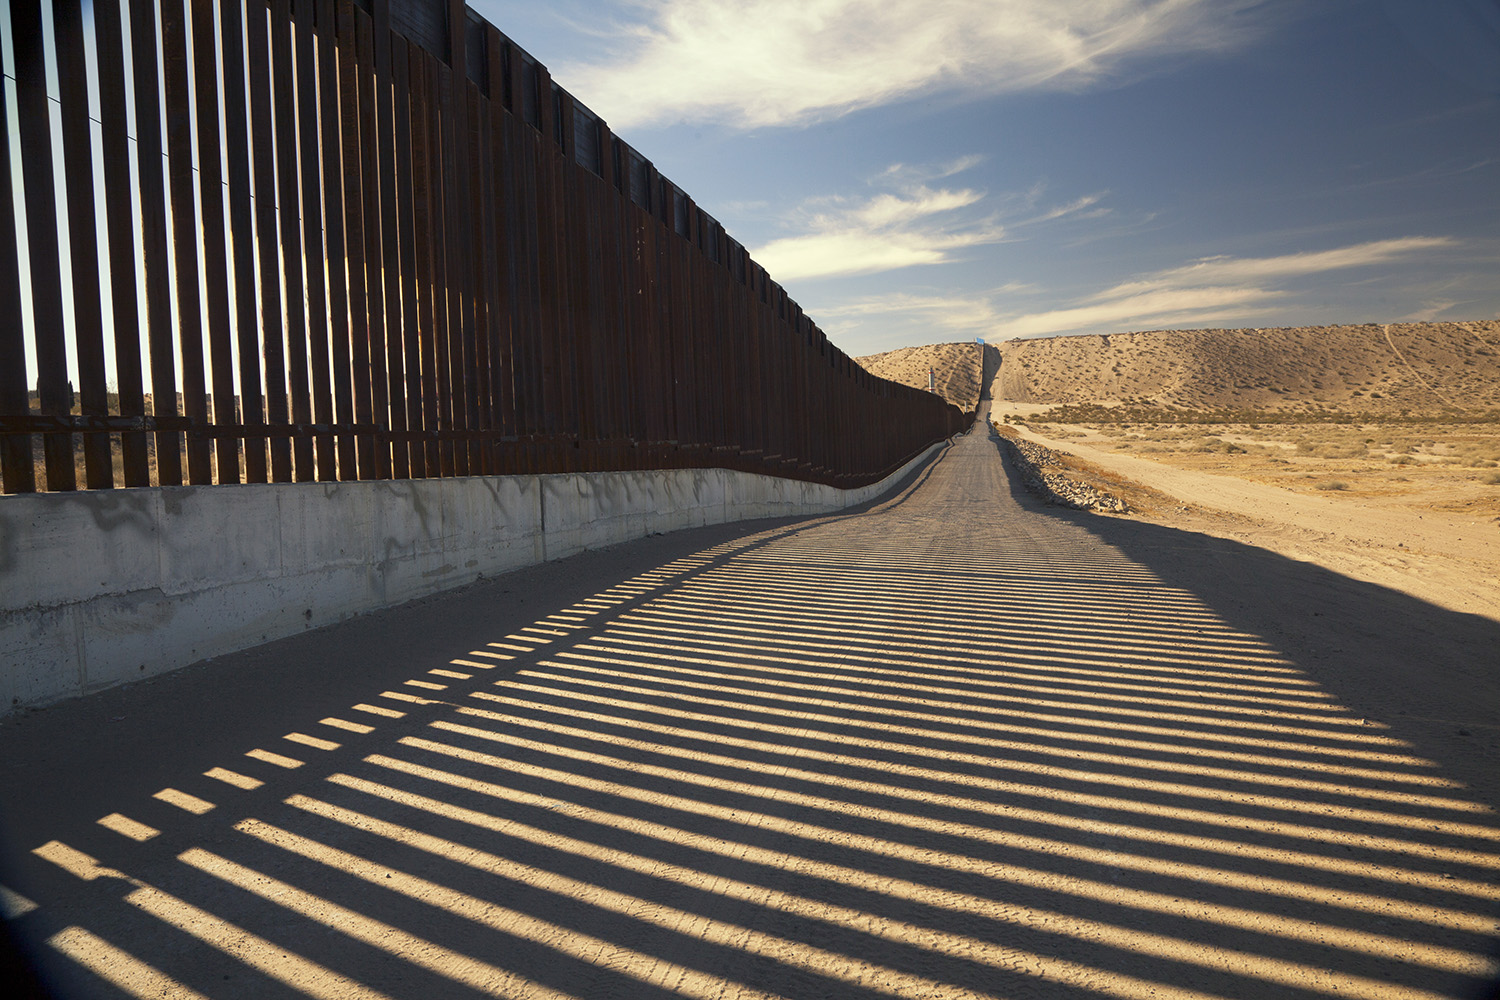 Border wall reaches 450 miles